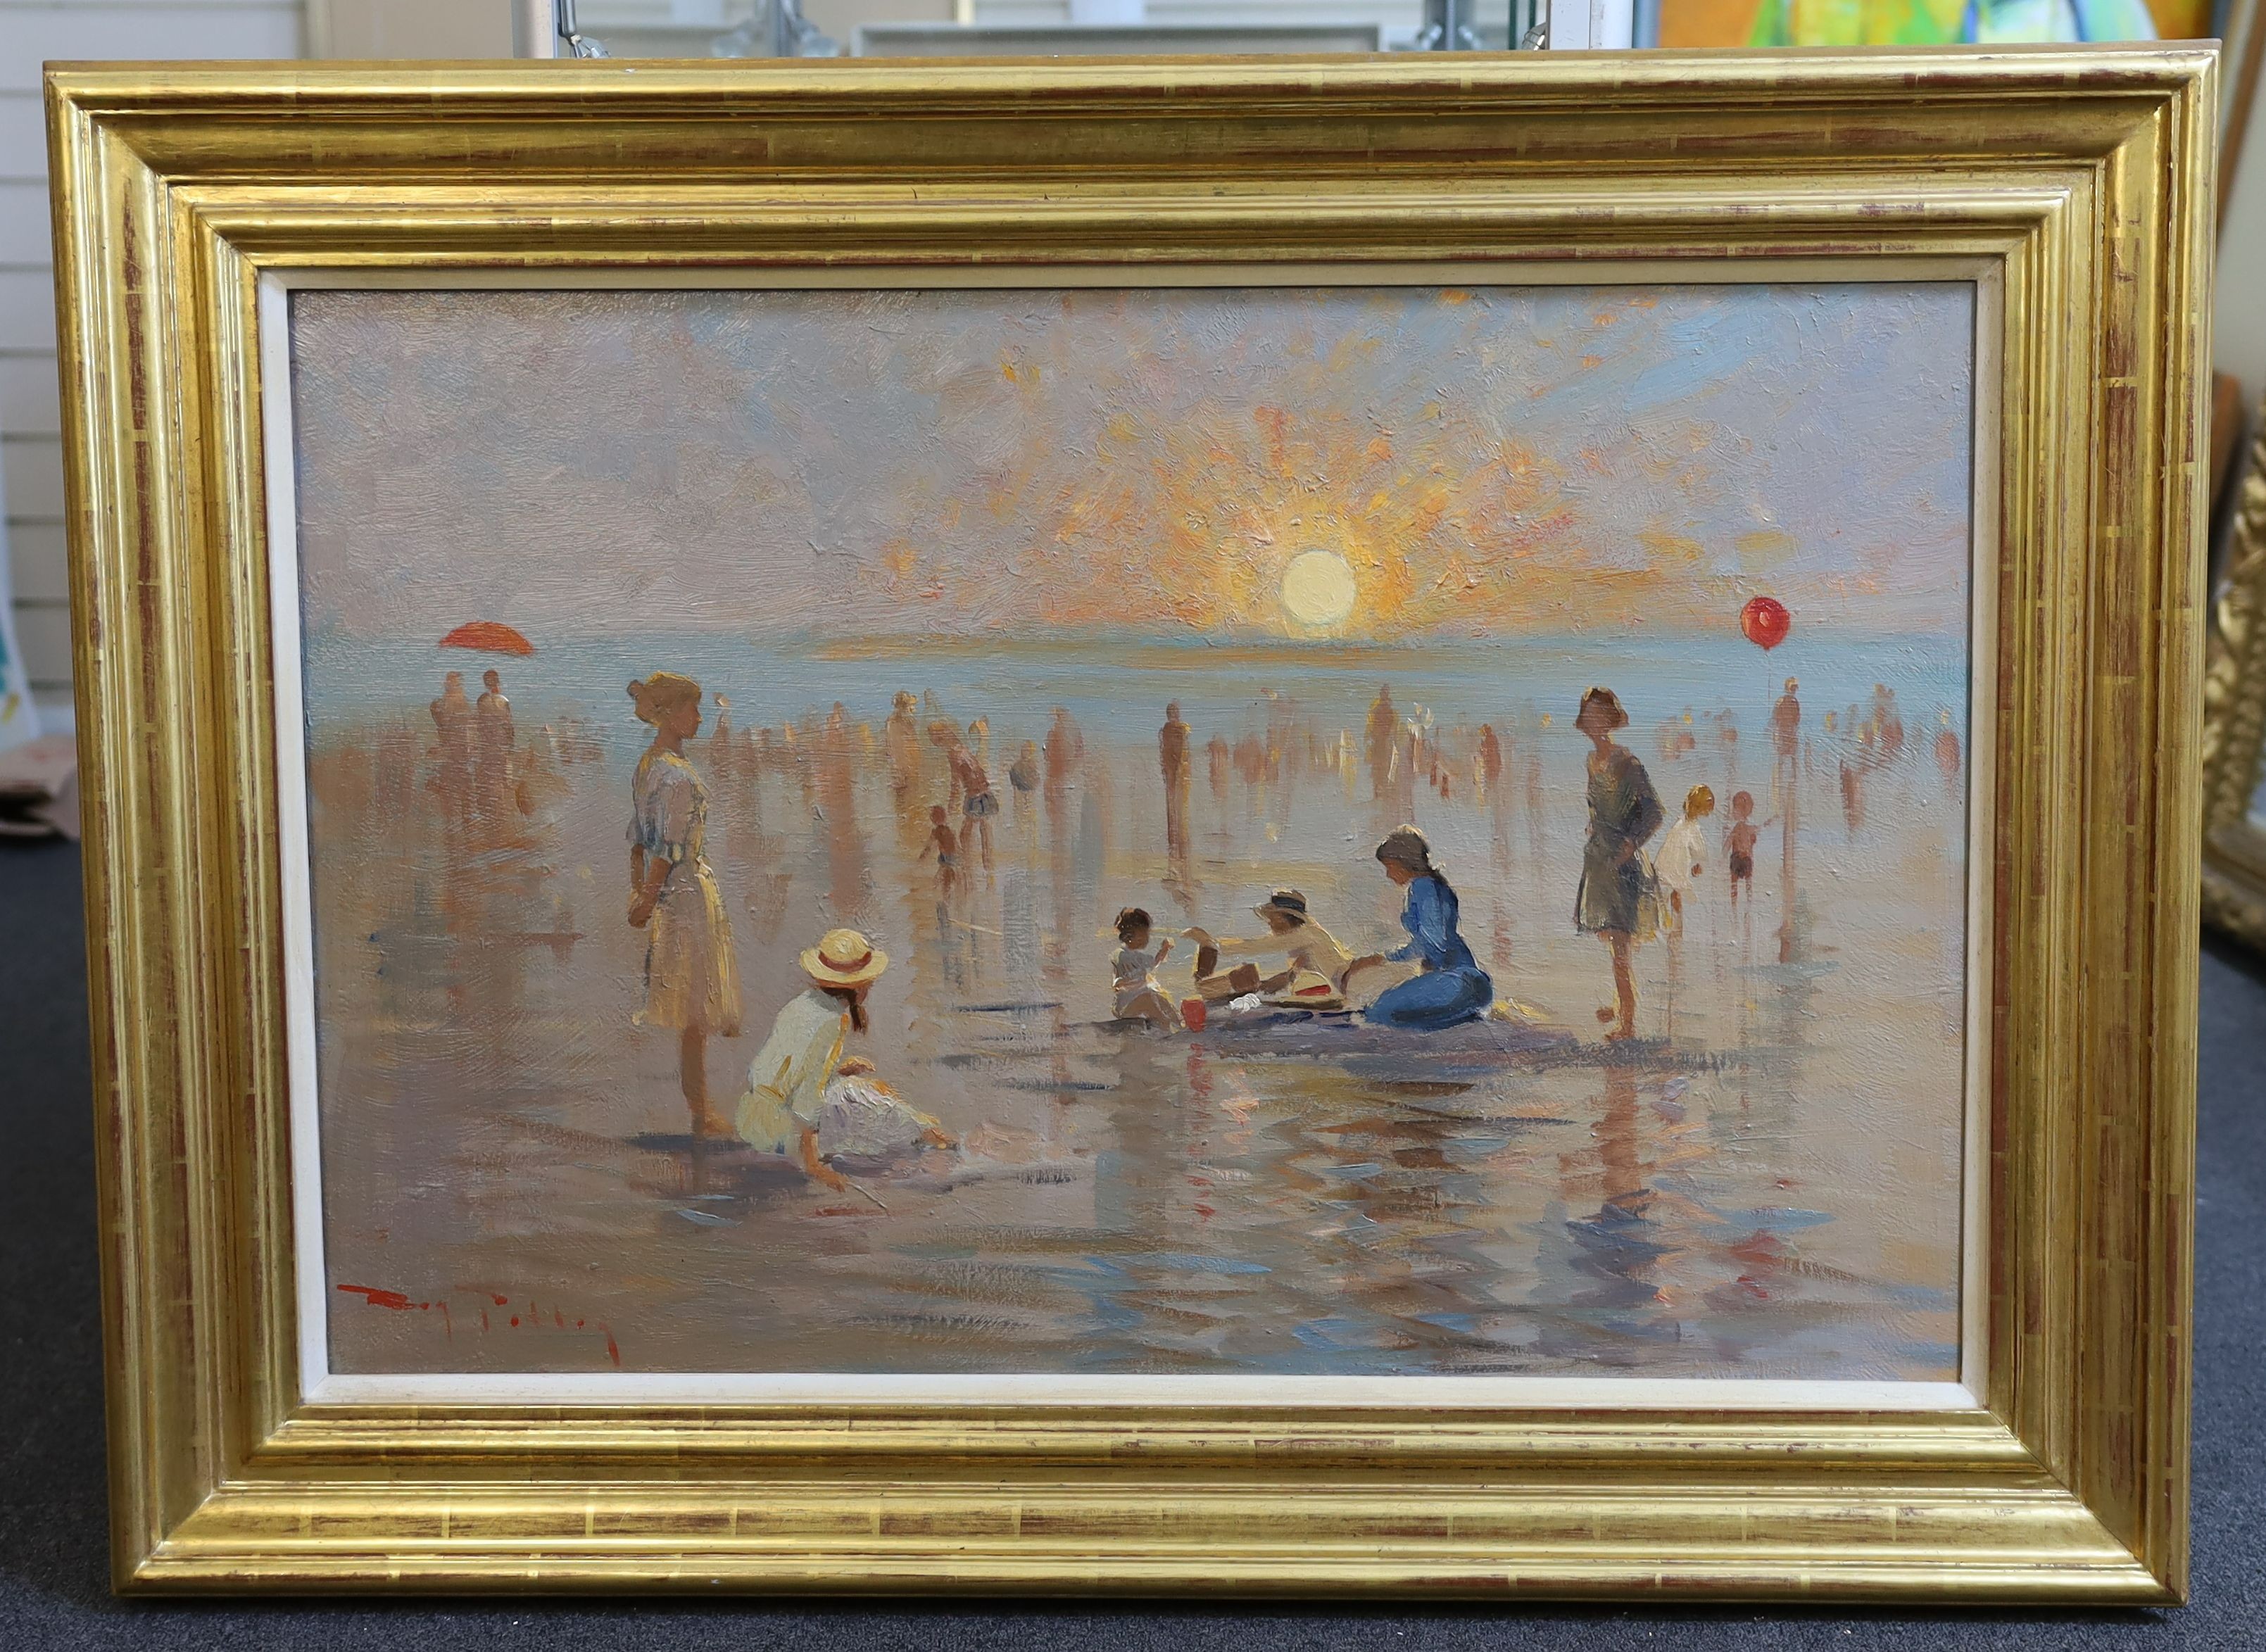 Roy Petley (b.1950), 'Last of the sun', oil on panel, 60 x 91cm